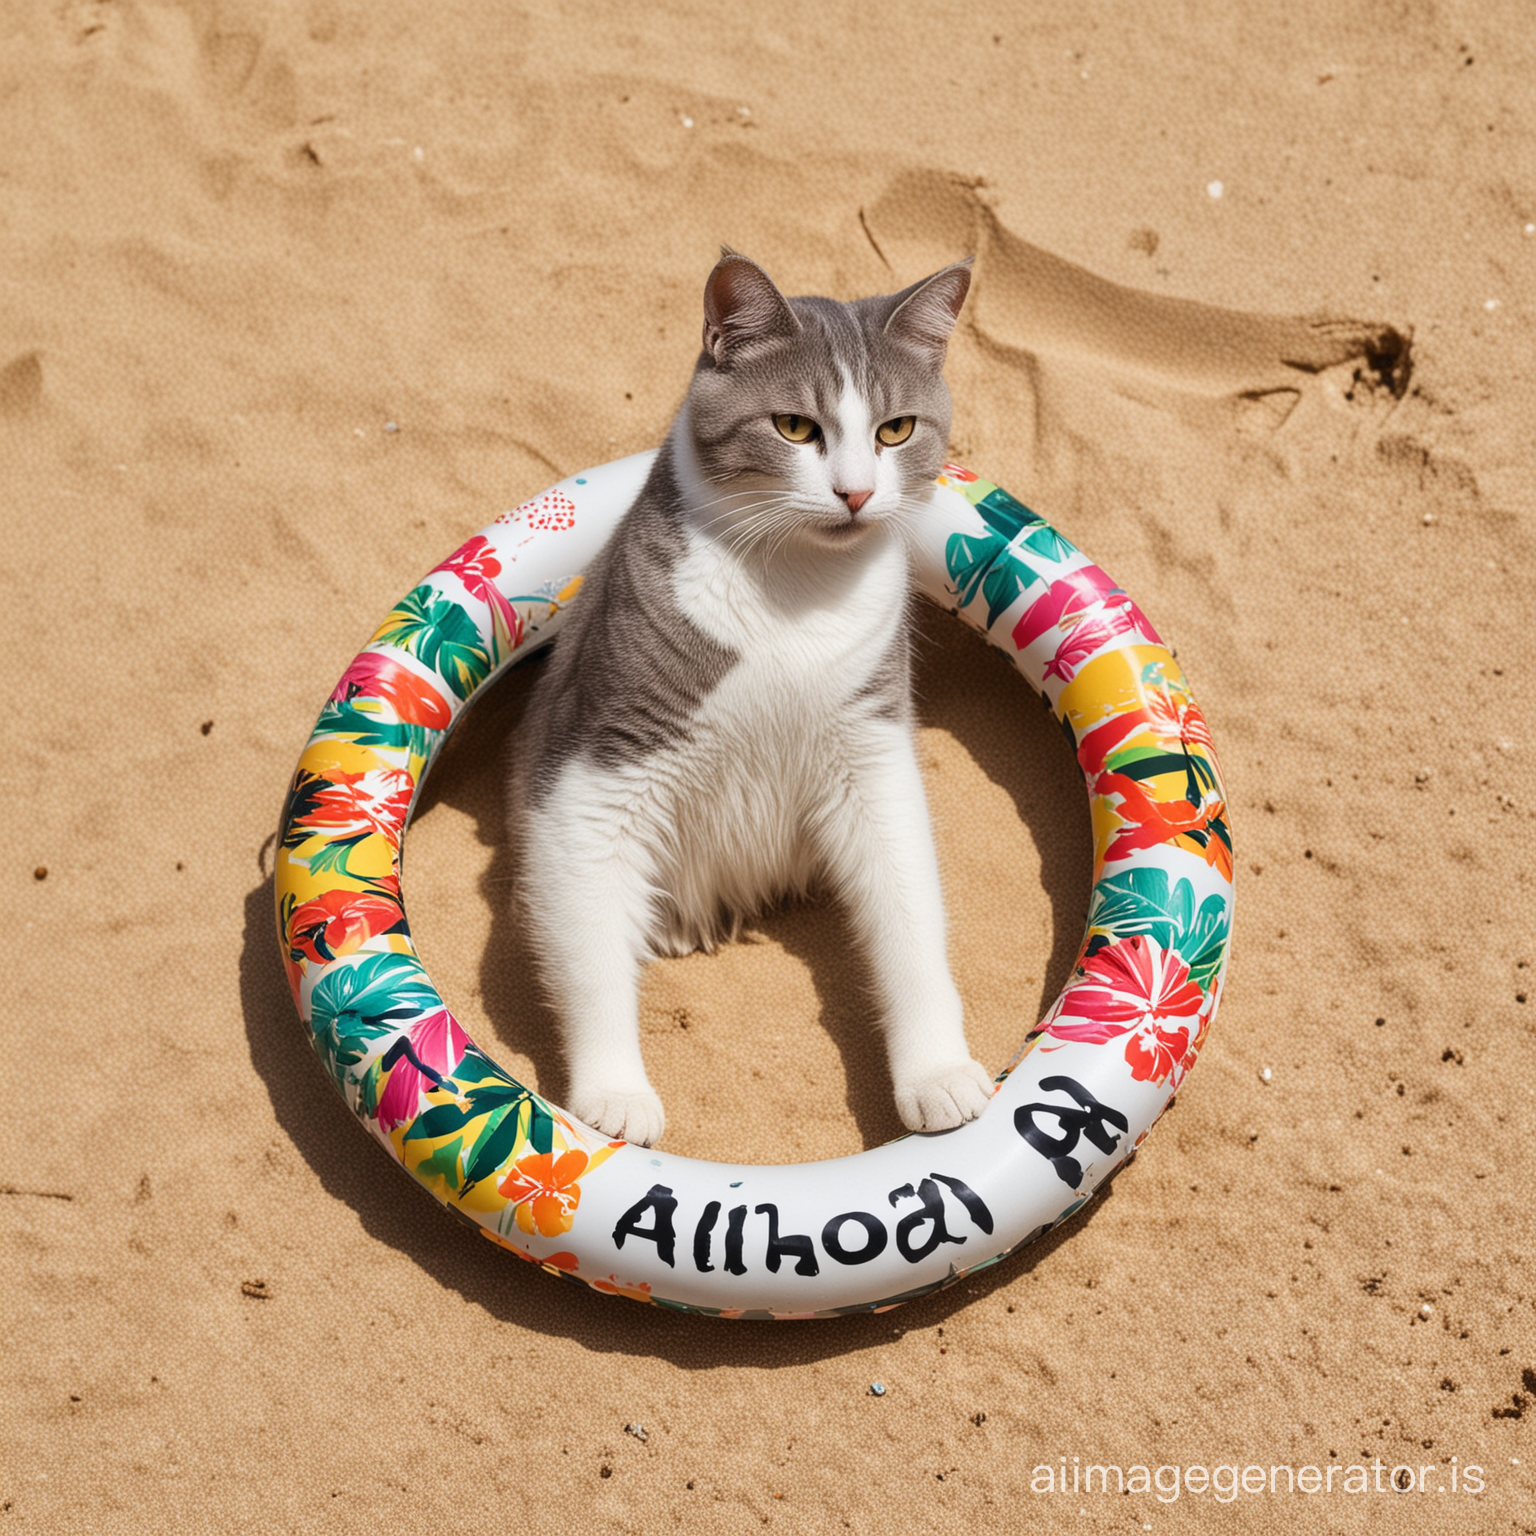 Cat-enjoy-rubber ring-beach-wear-aloha